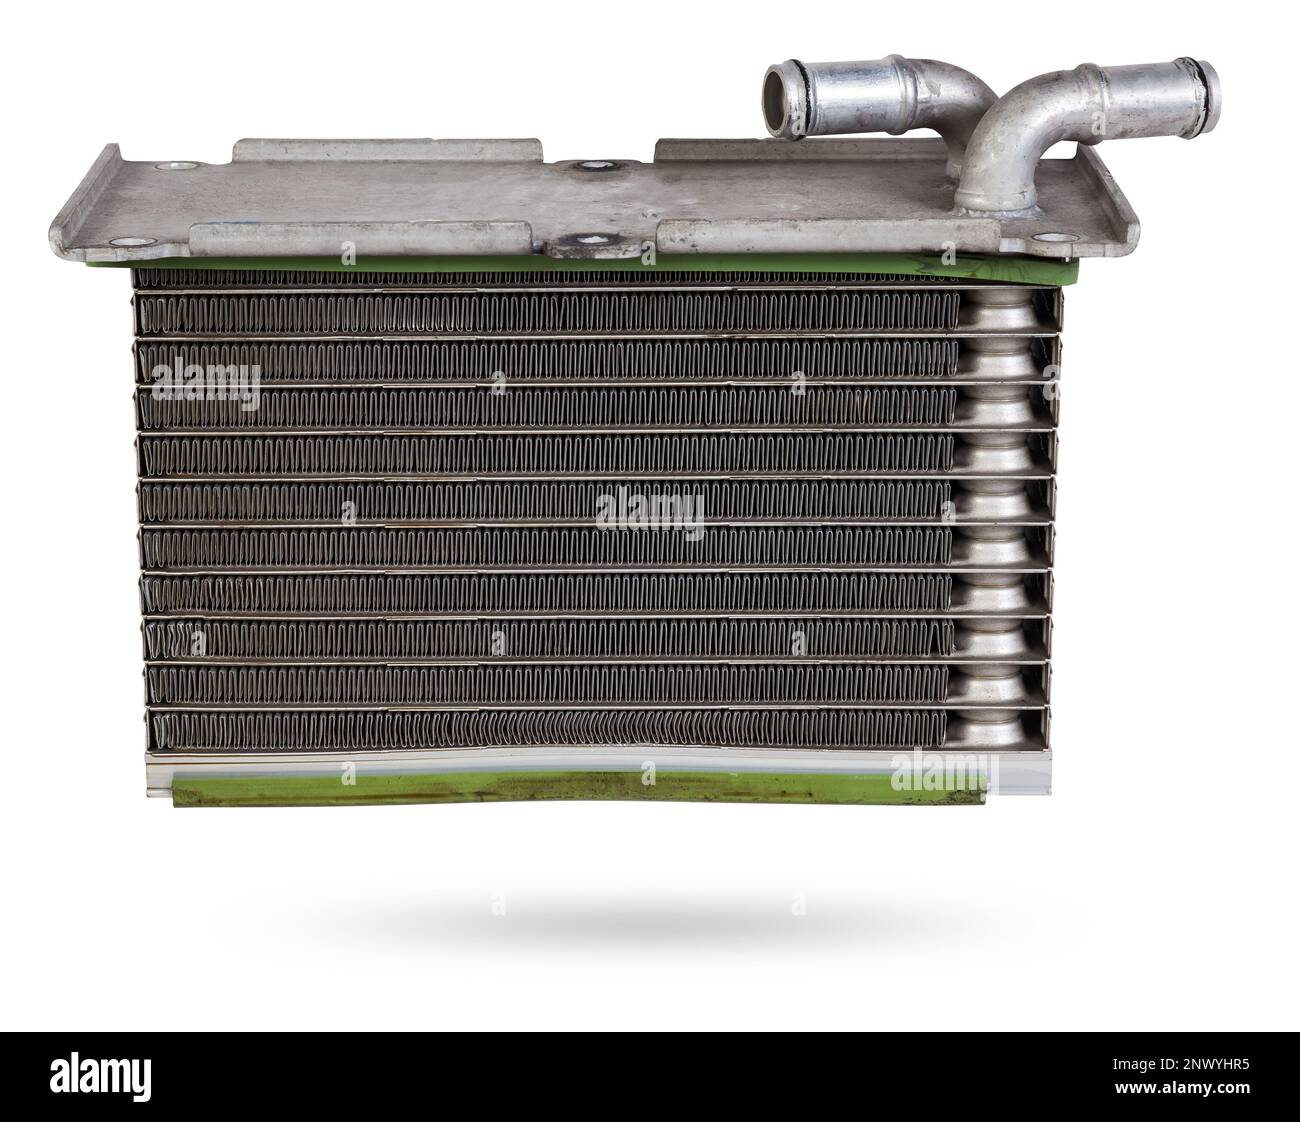 https://c8.alamy.com/comp/2NWYHR5/aluminum-car-interior-heater-radiator-for-heating-the-air-in-the-car-2NWYHR5.jpg